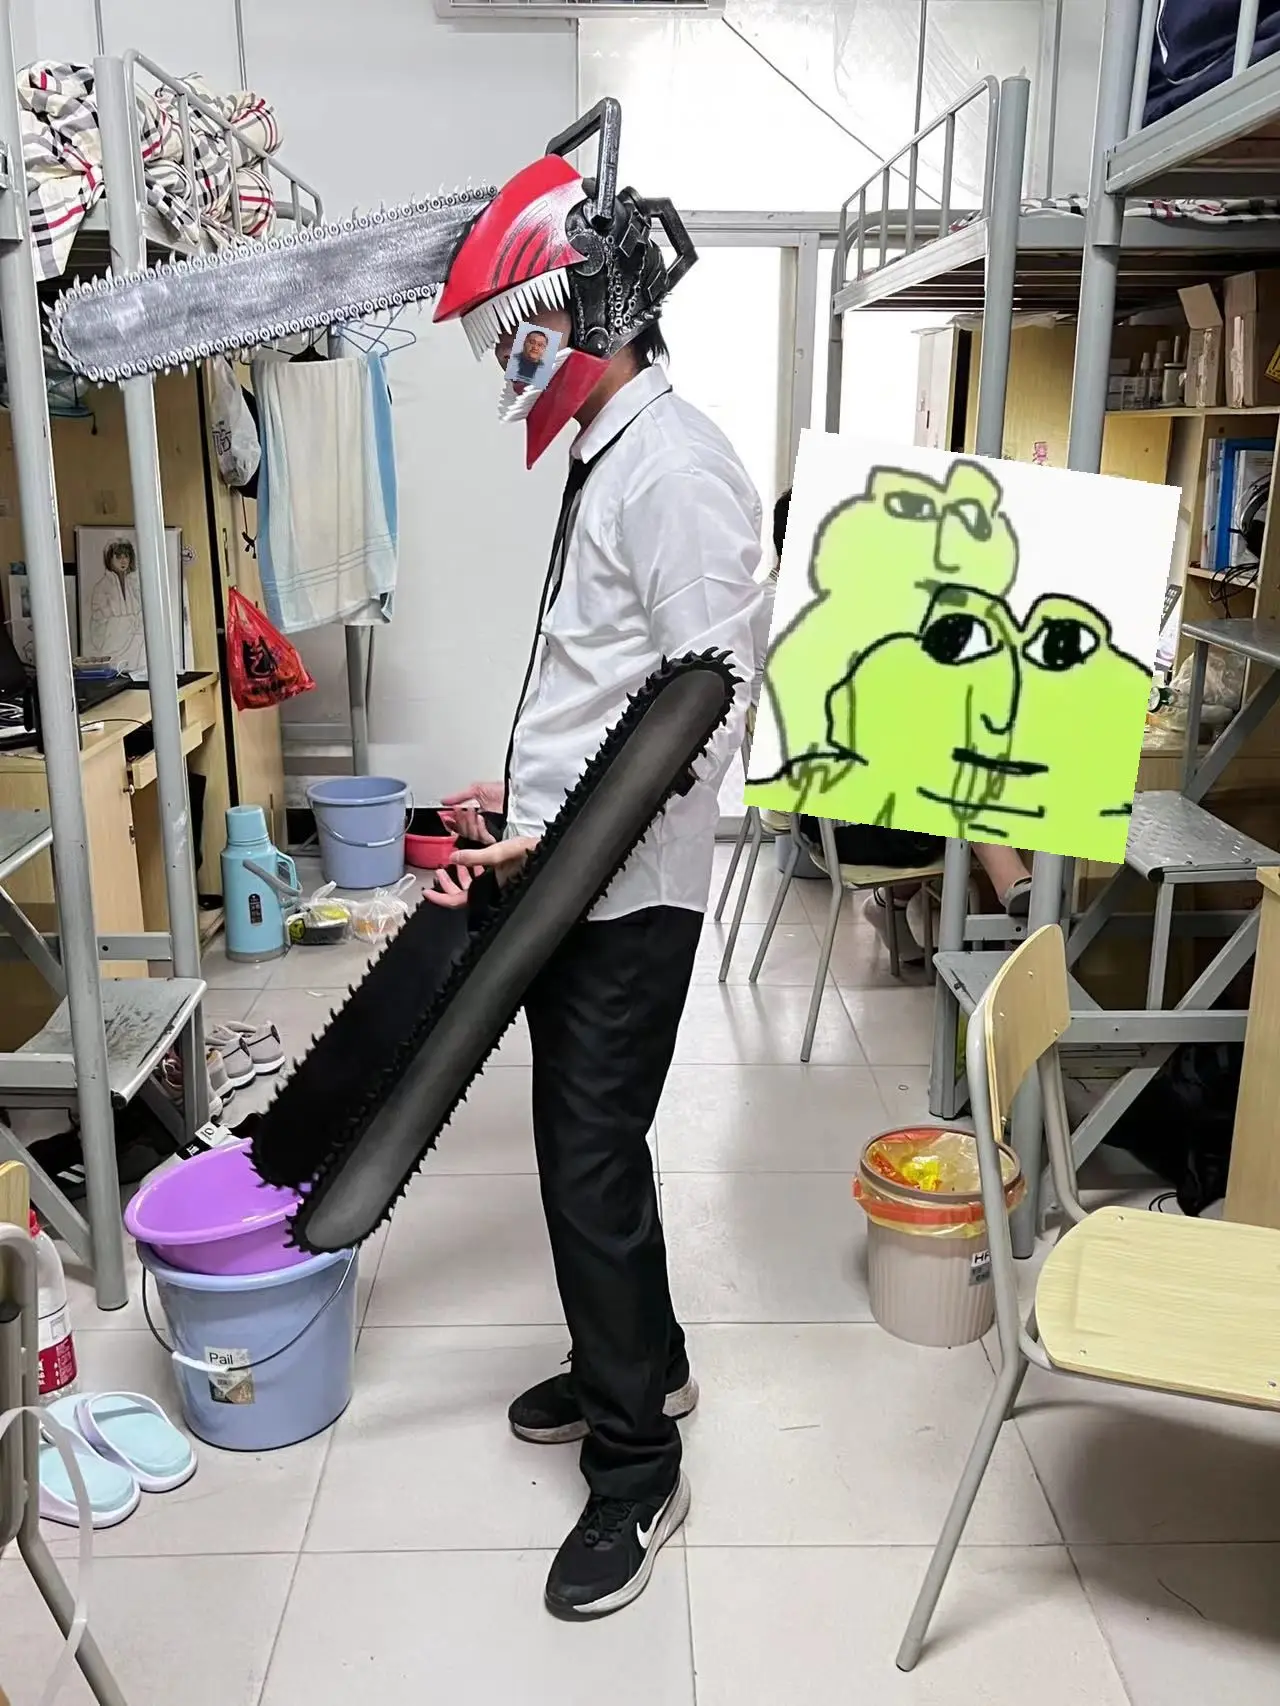 Chainsaw Man Cosplay Latex mask Headgear Rubber Full head Helmets Denji Cos  costume props Roleplay Fetish fashion